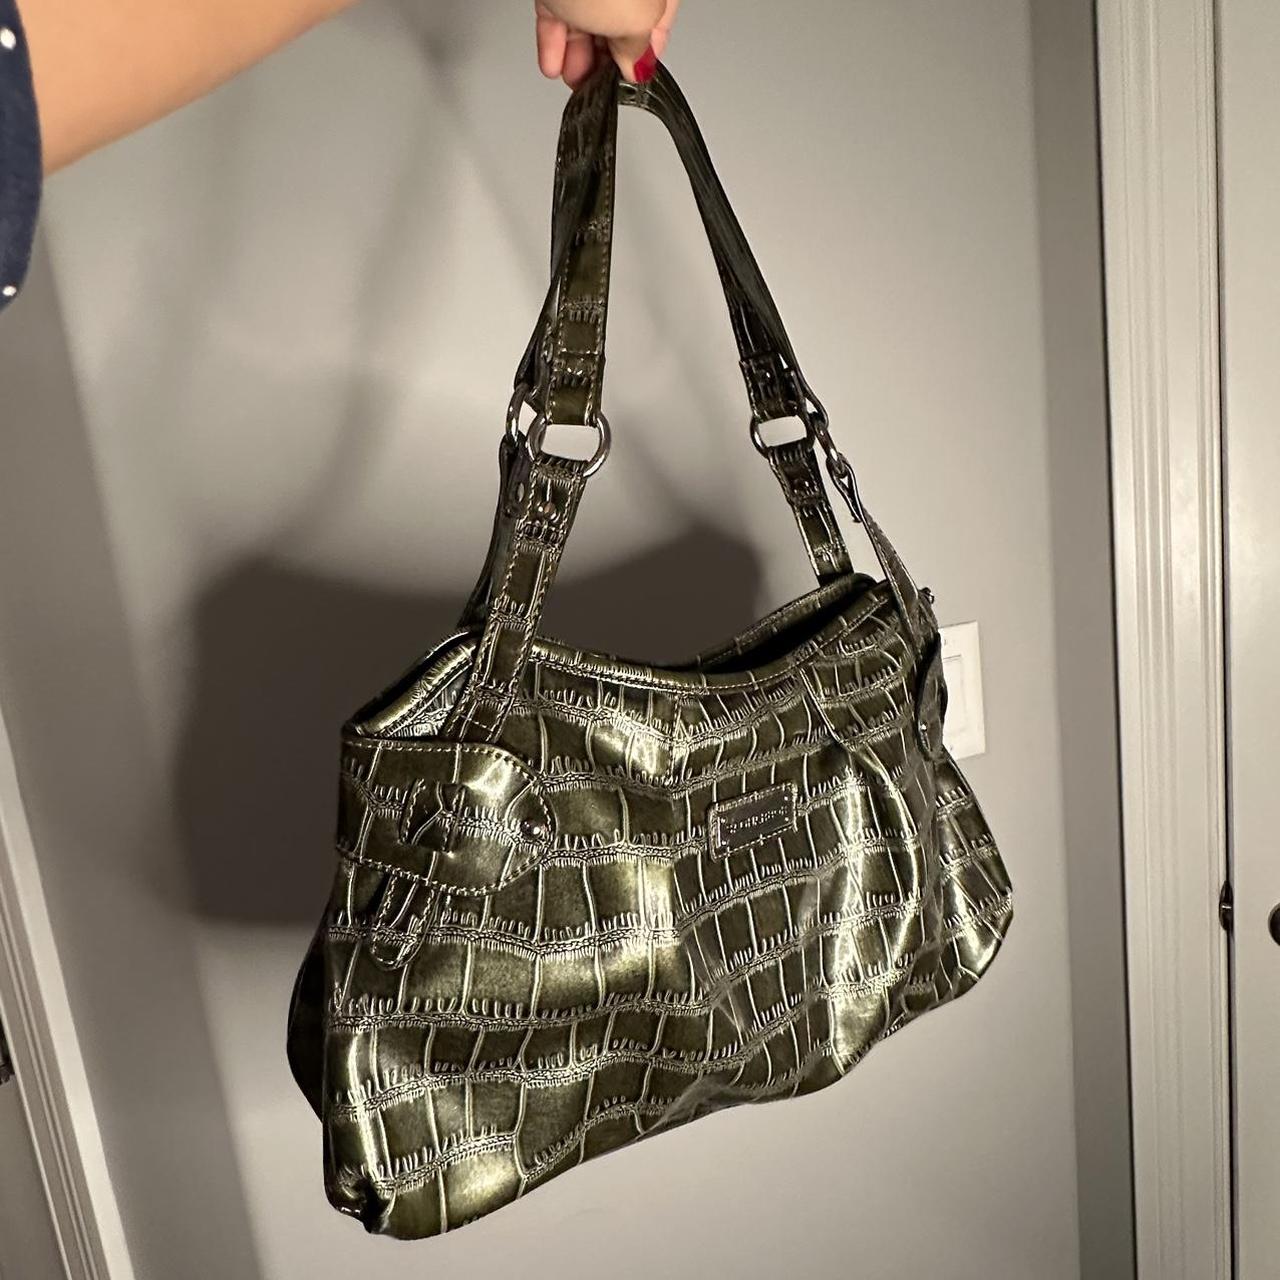 Emilie M Green Faux crocodile handbag / purse - clothing & accessories - by  owner - apparel sale - craigslist